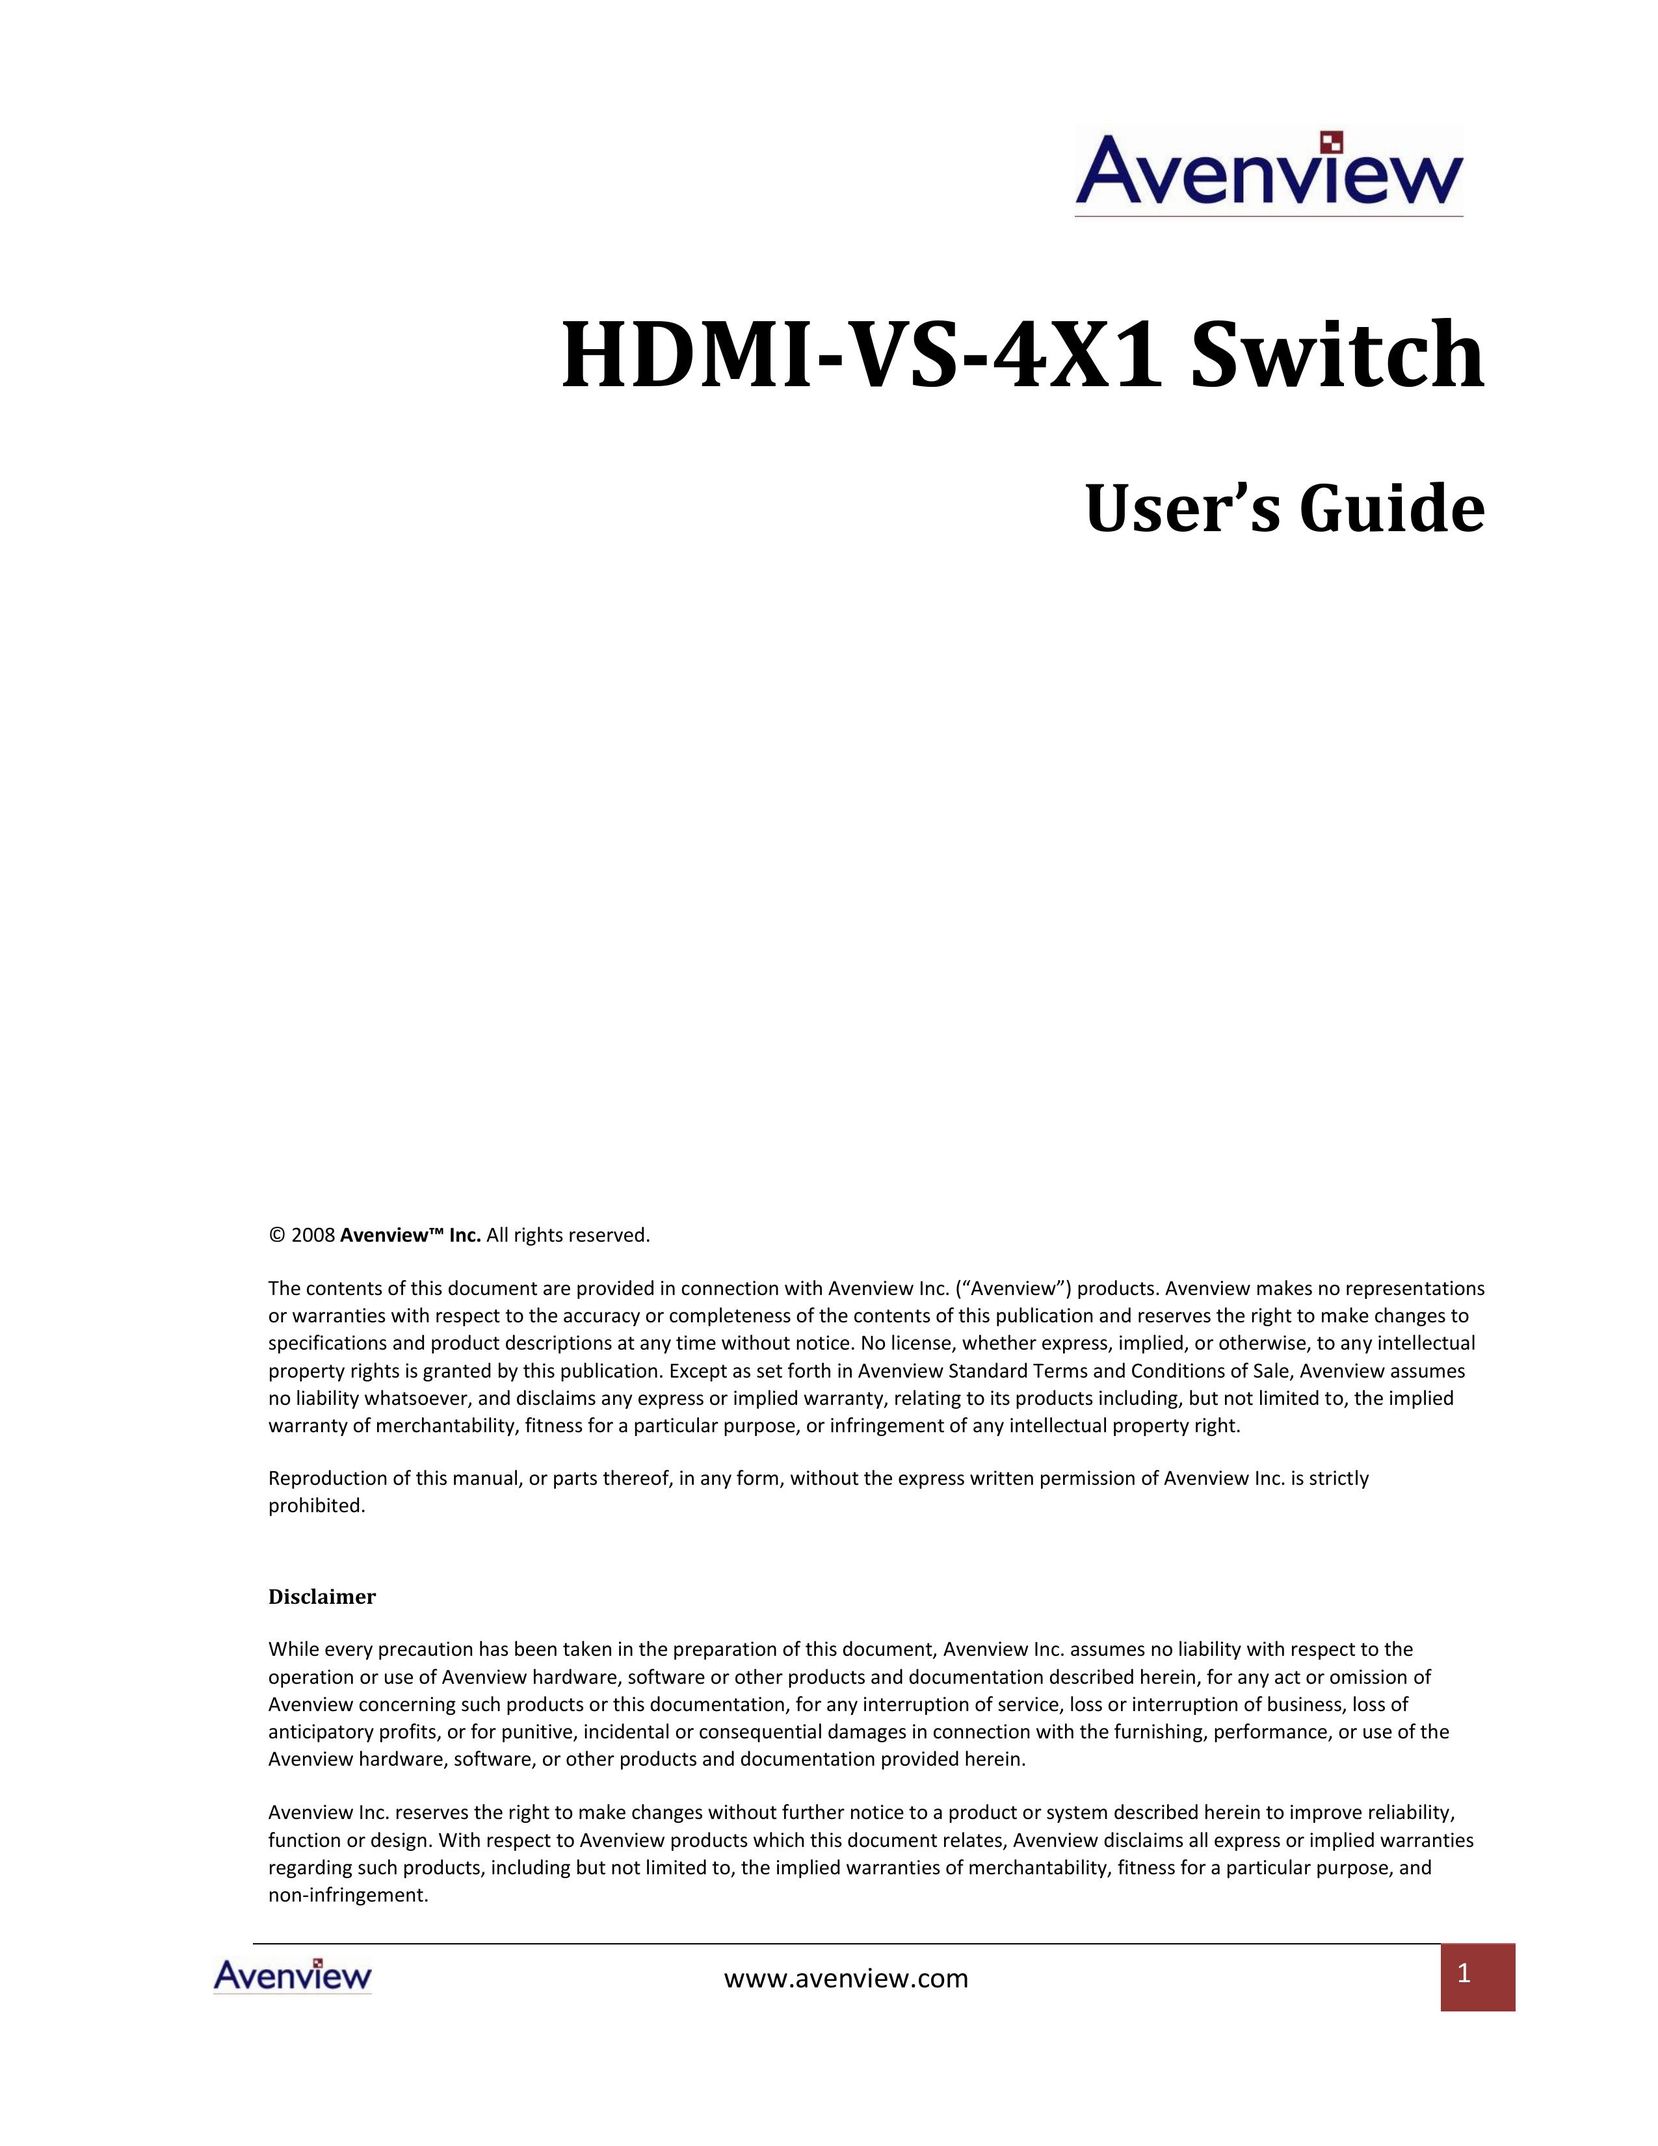 Avenview HDMI-VS-4X1 Switch User Manual